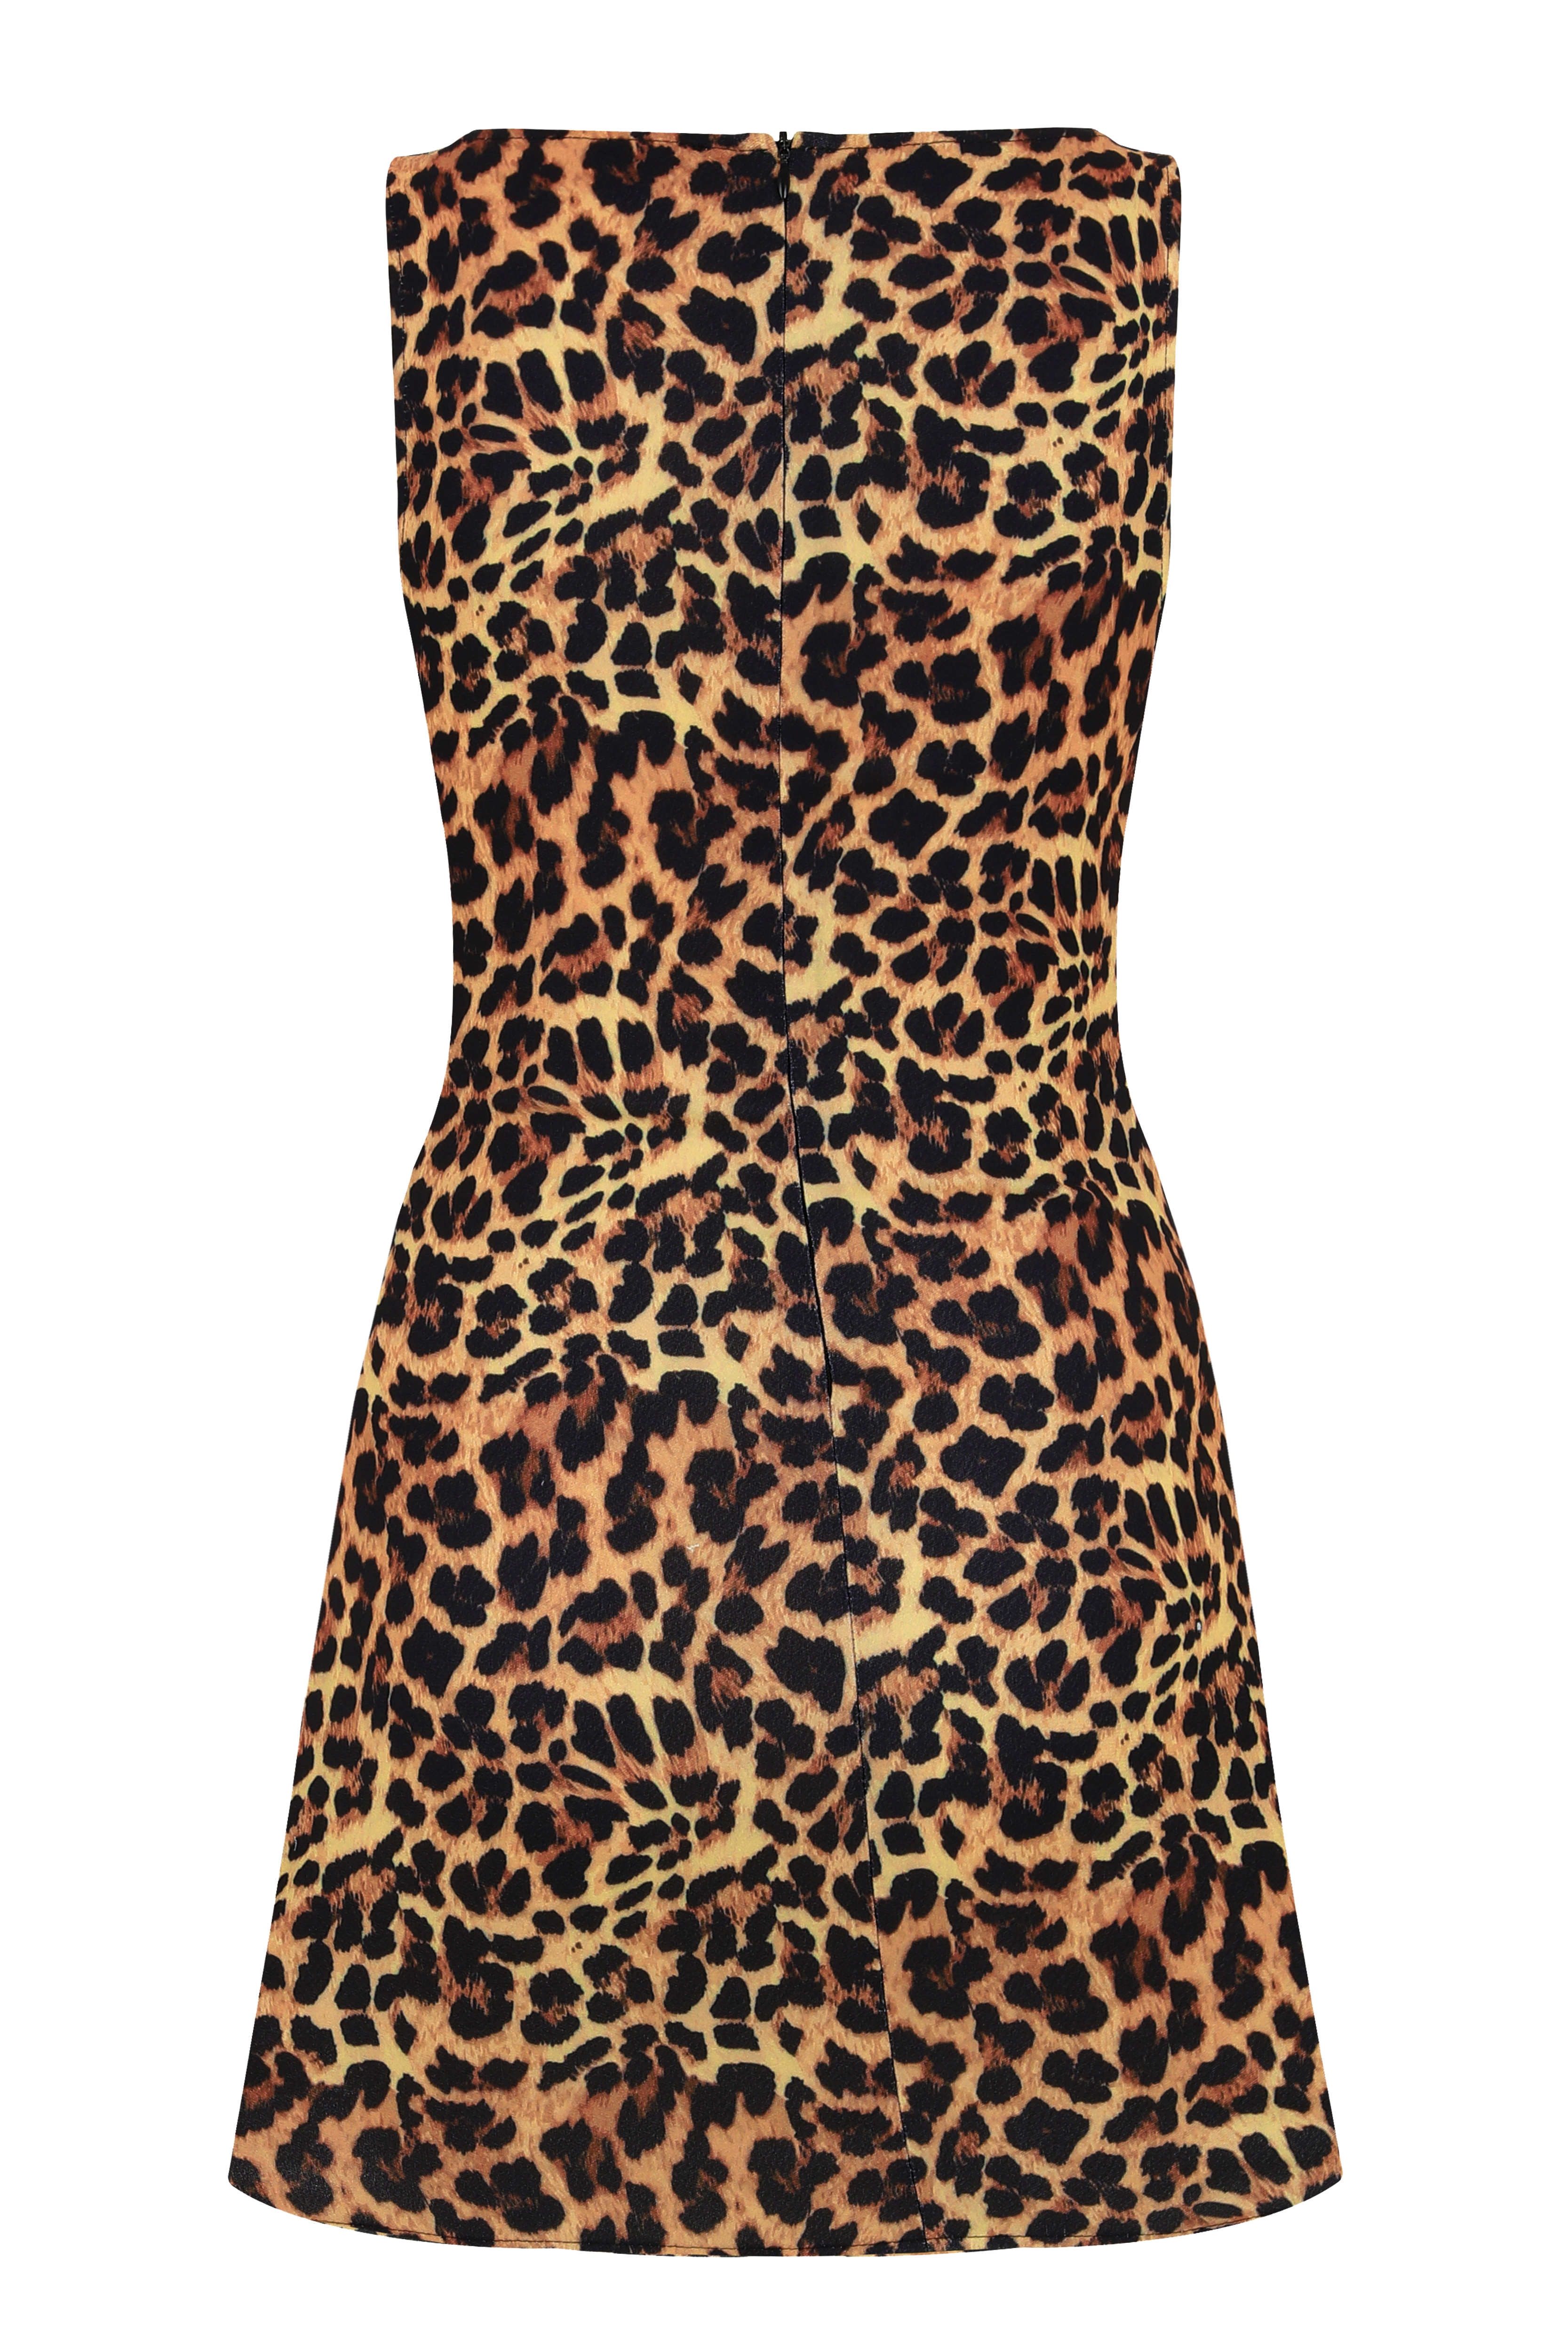 BARBIE Crepe Leopard Print Mini Athlete Dress